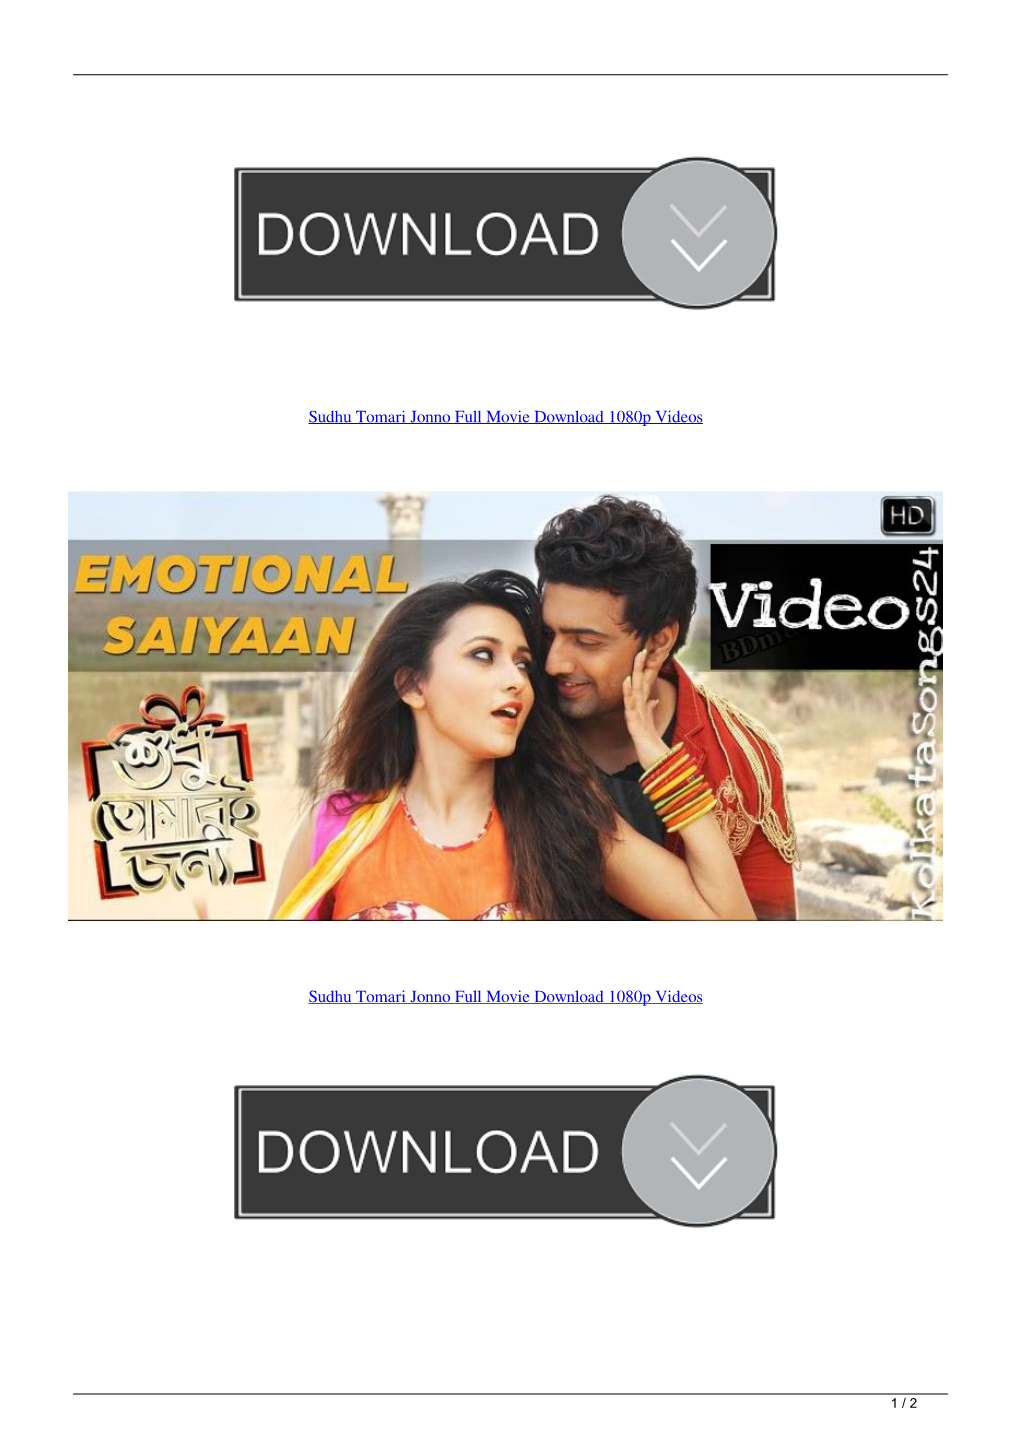 Sudhu Tomari Jonno Full Movie Download 1080P Videos